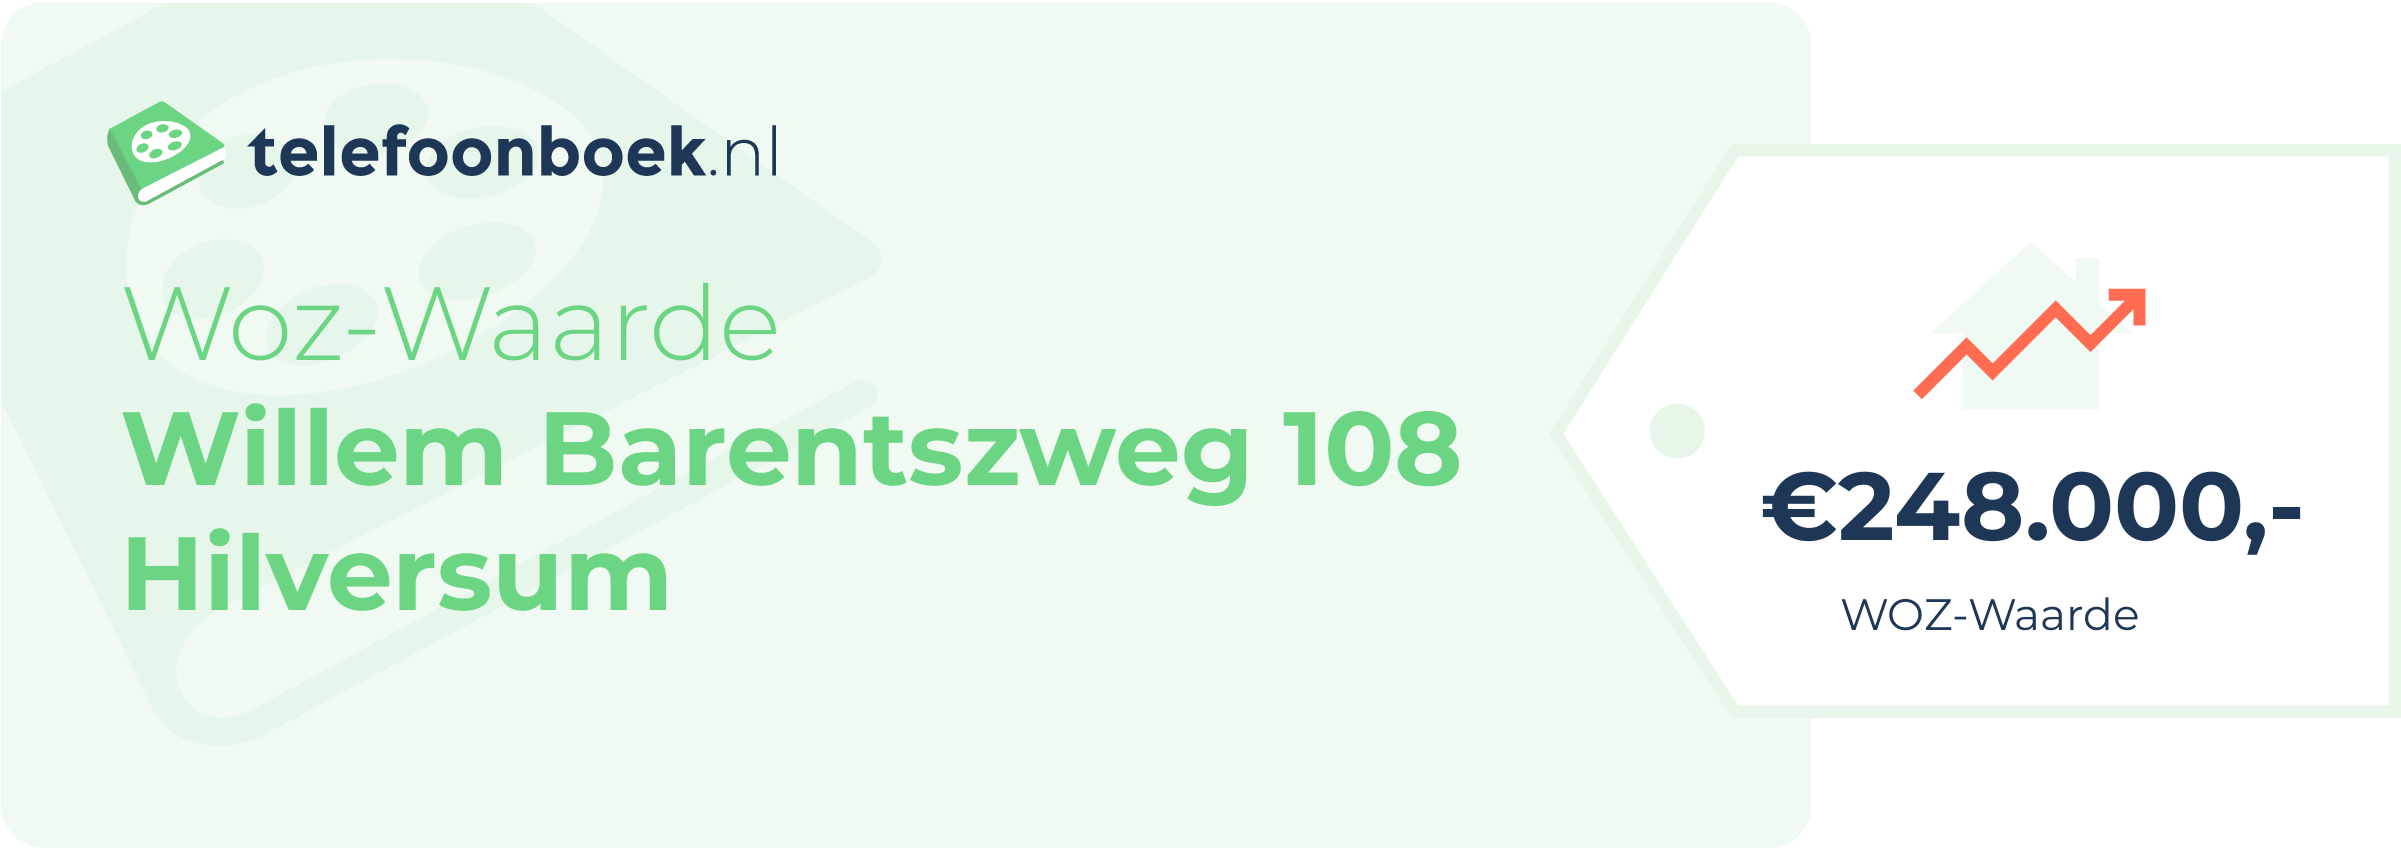 WOZ-waarde Willem Barentszweg 108 Hilversum